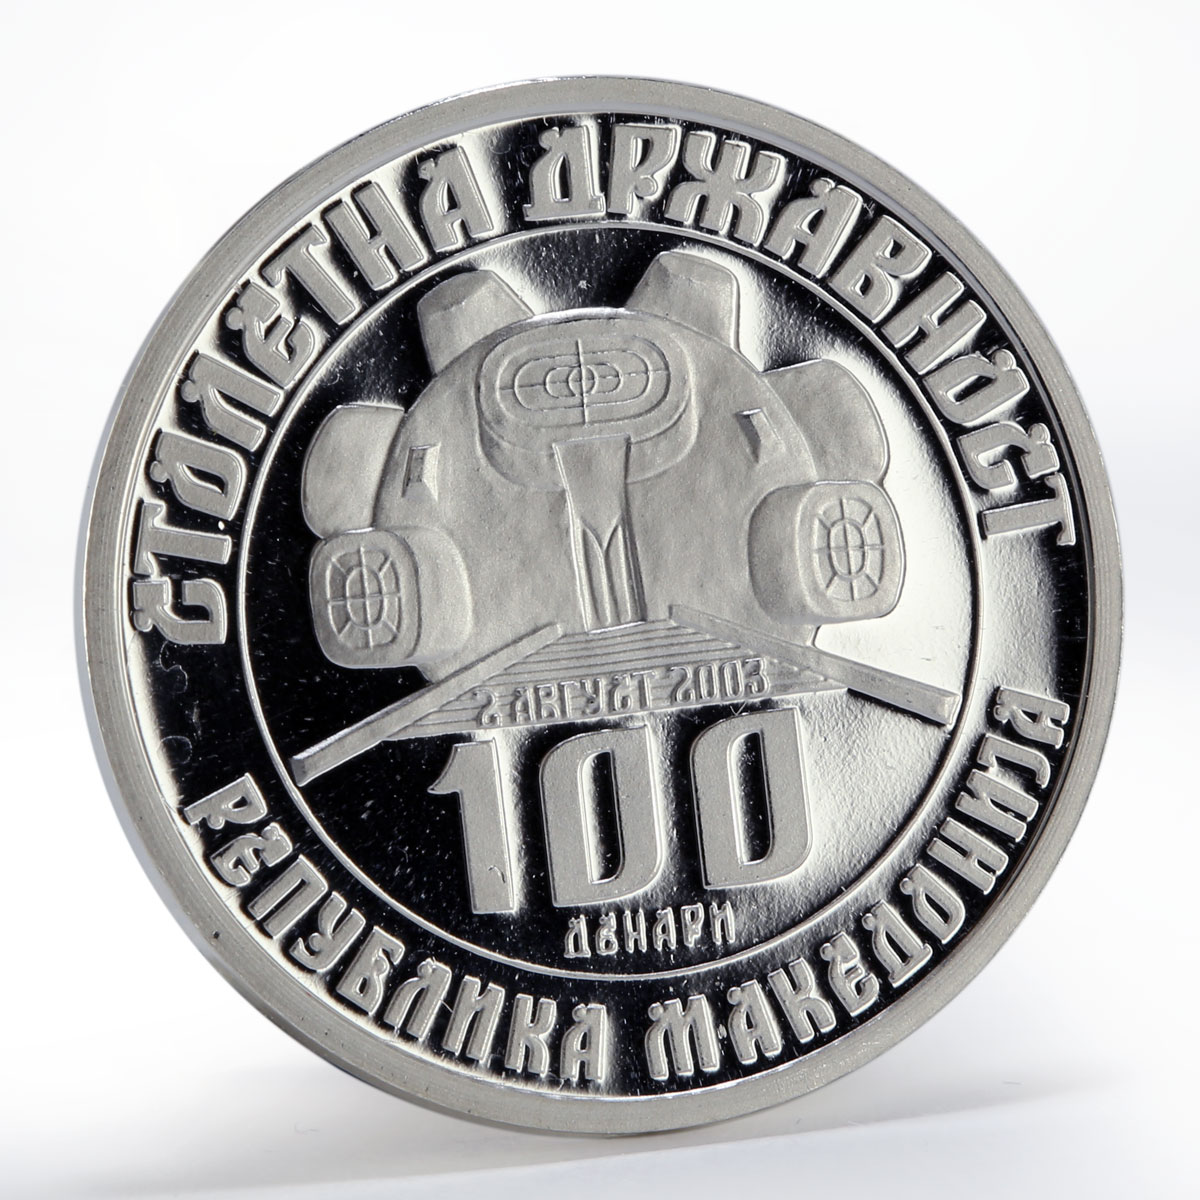 Macedonia 100 denari Dame Gruev revolutionary proof silver coin 2003